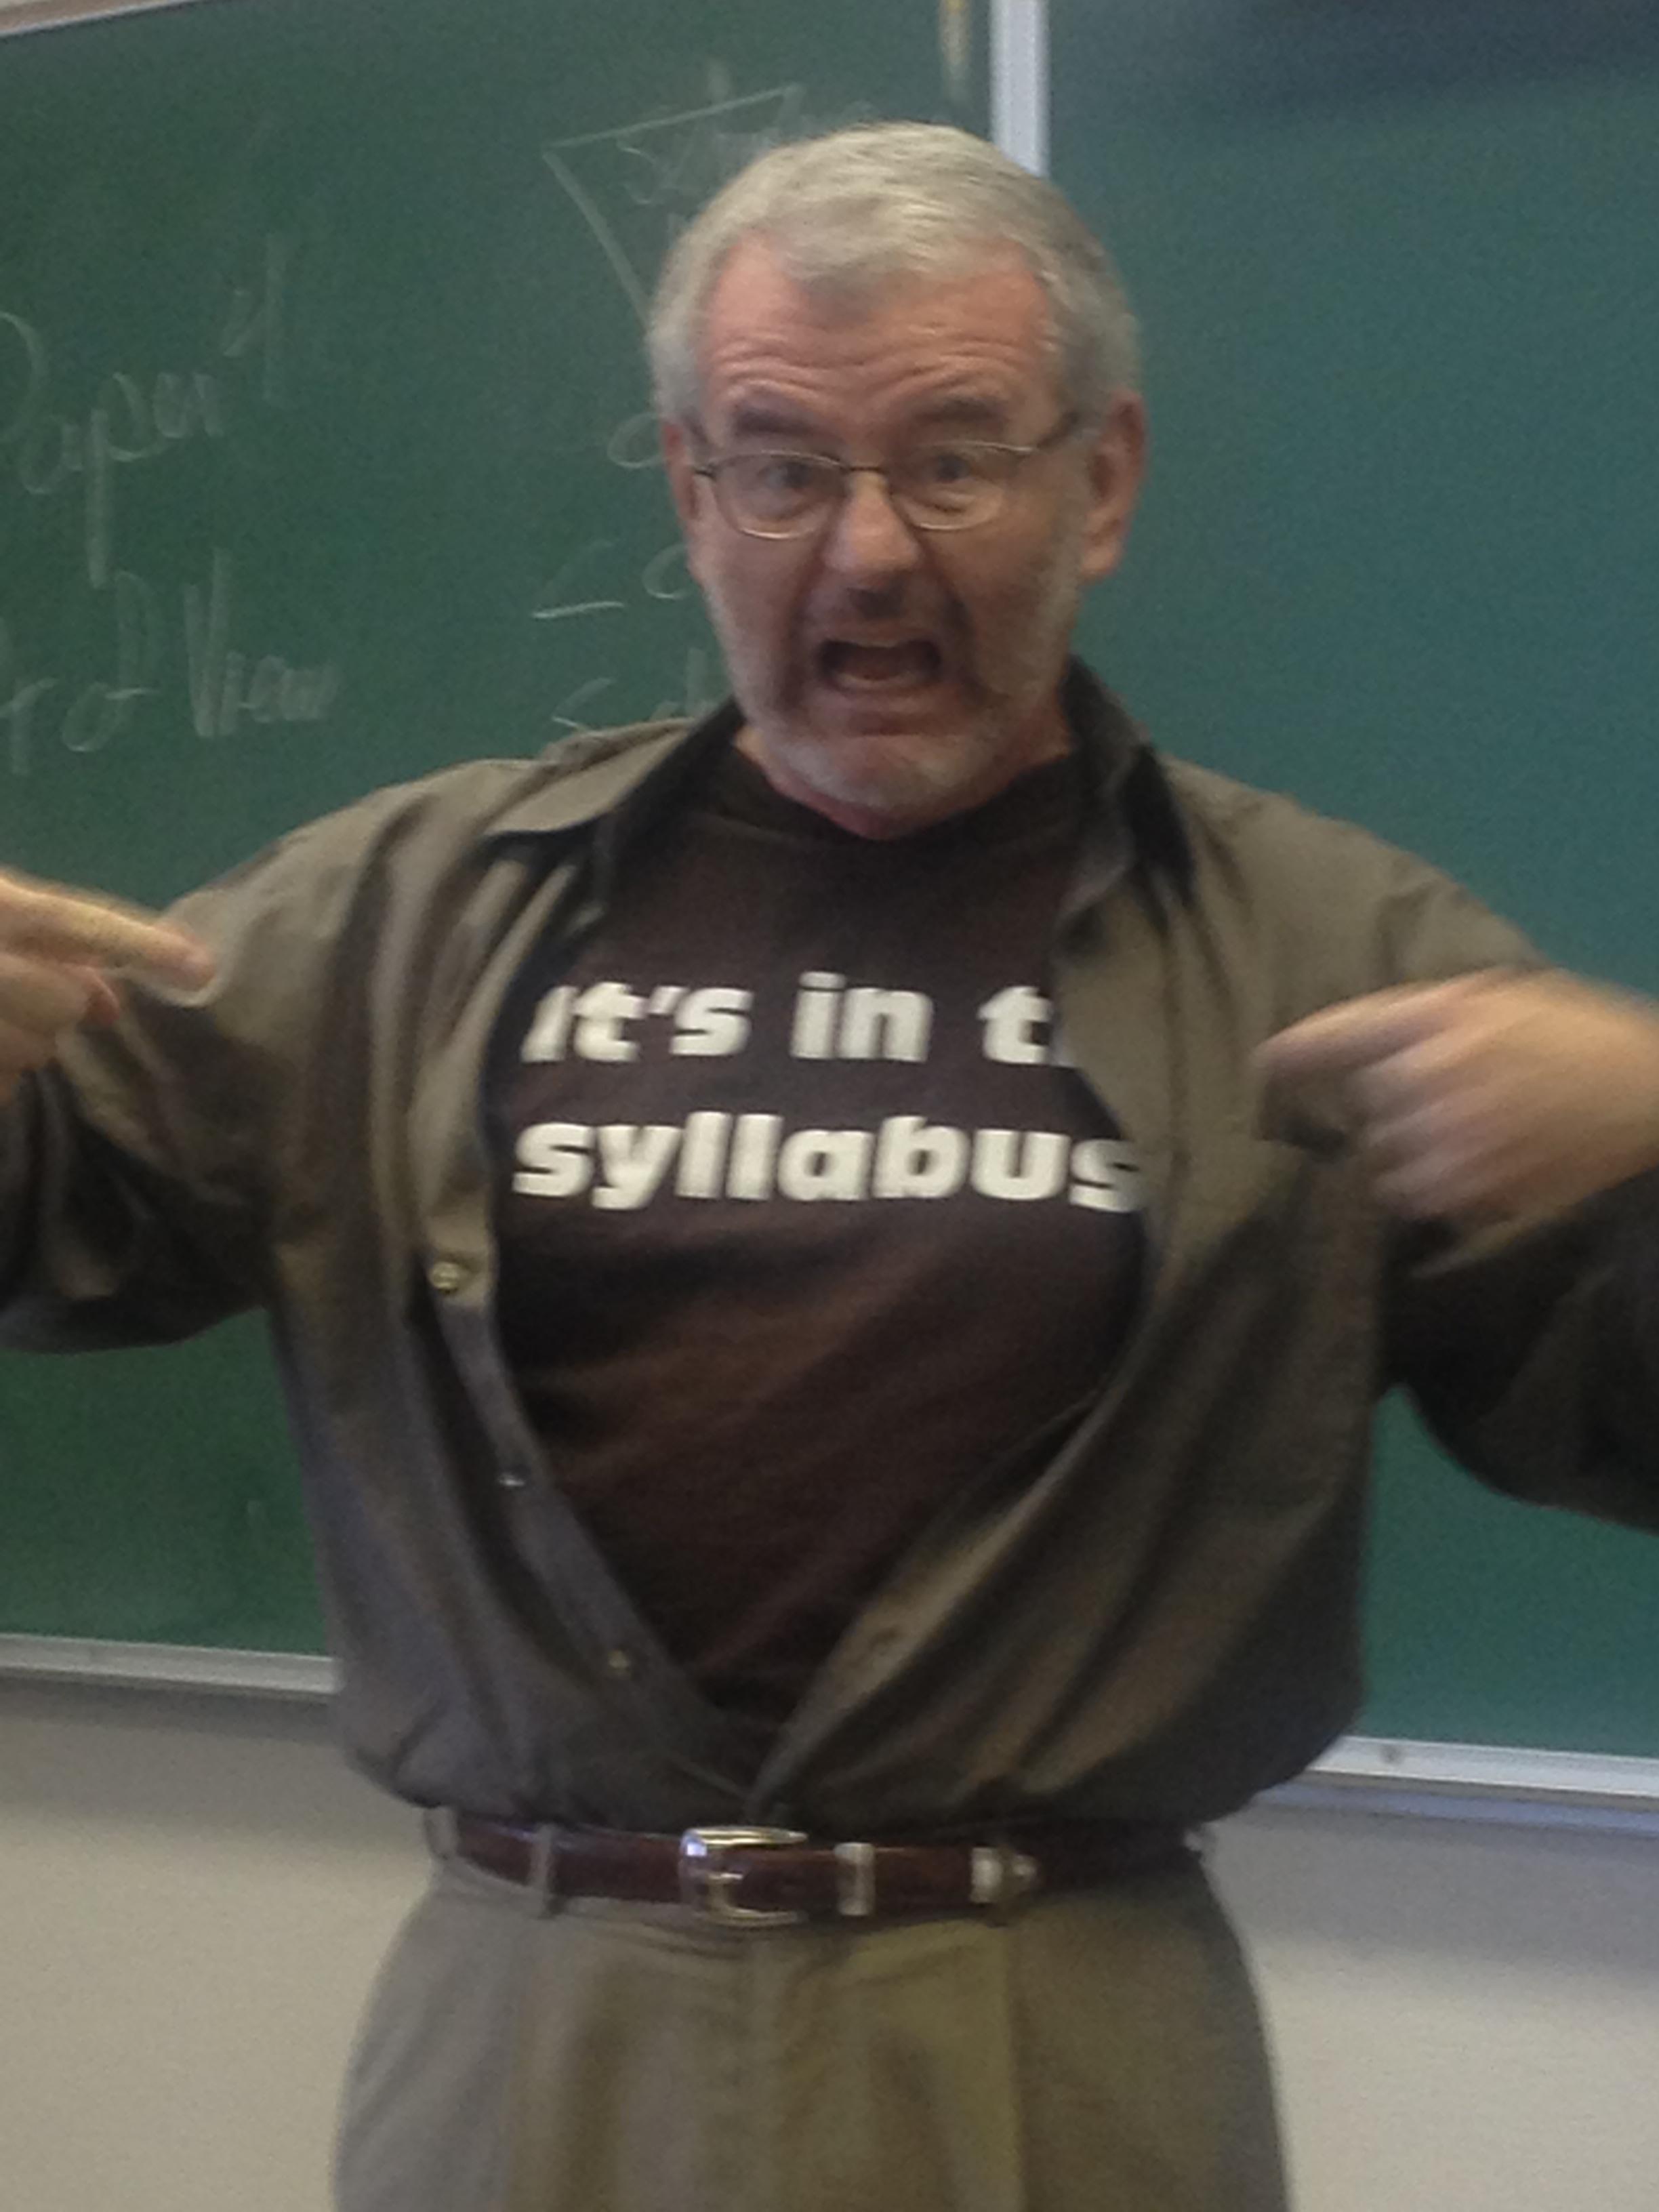 The t-shirt many professors would enjoy wearing